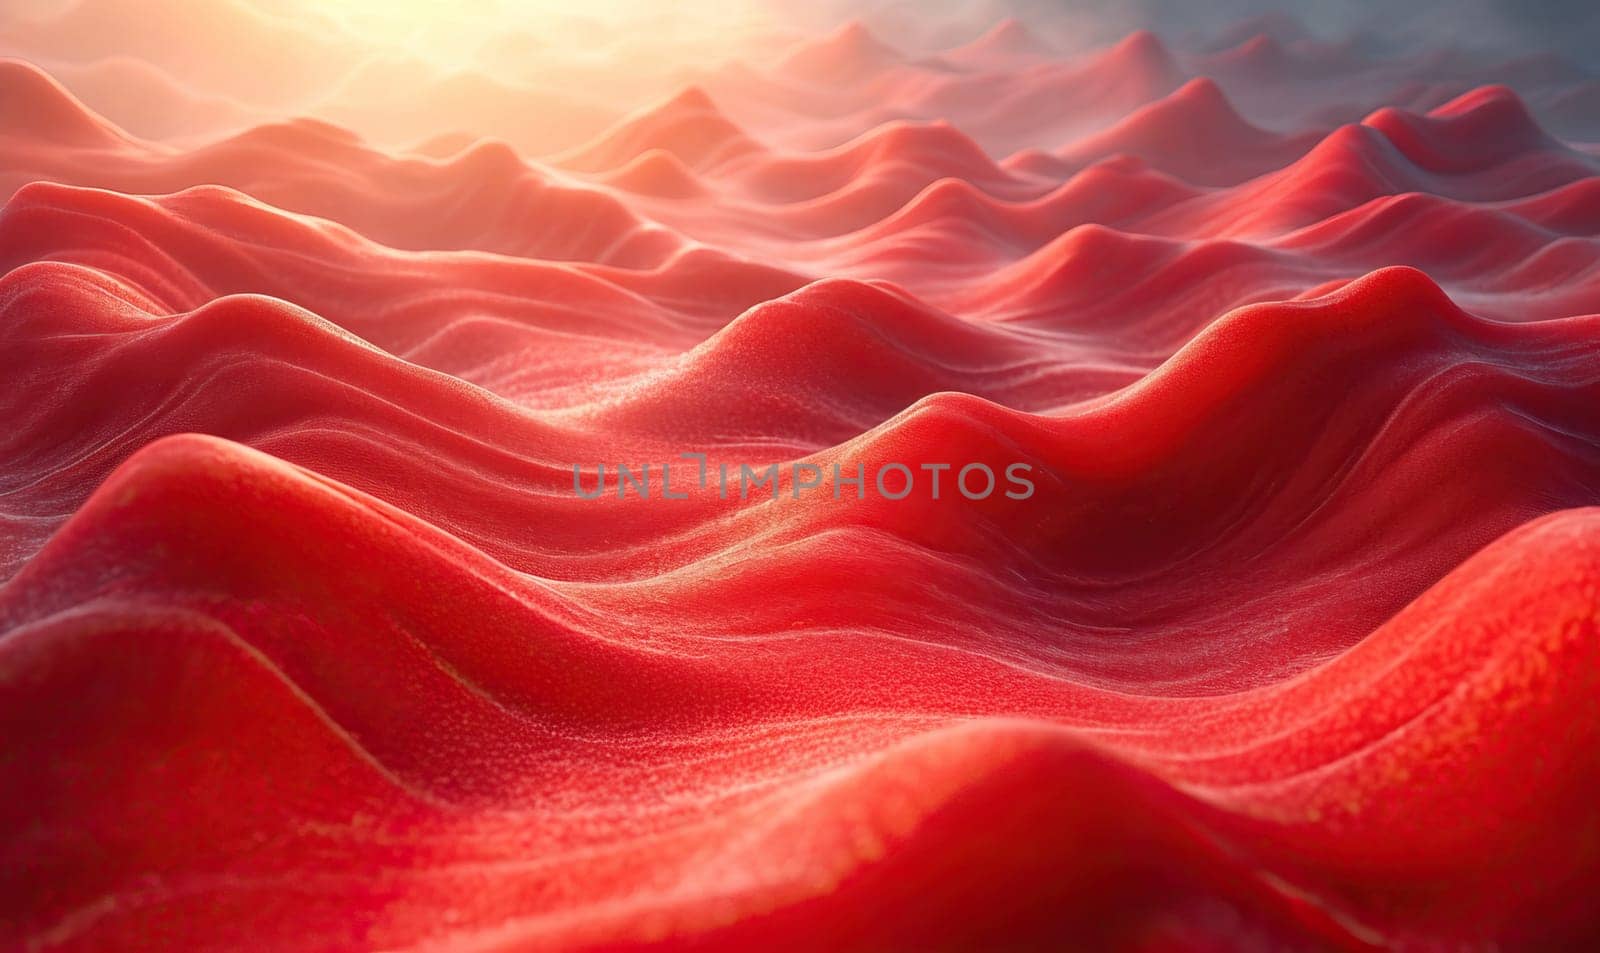 Creative background with red wavy texture. by Fischeron